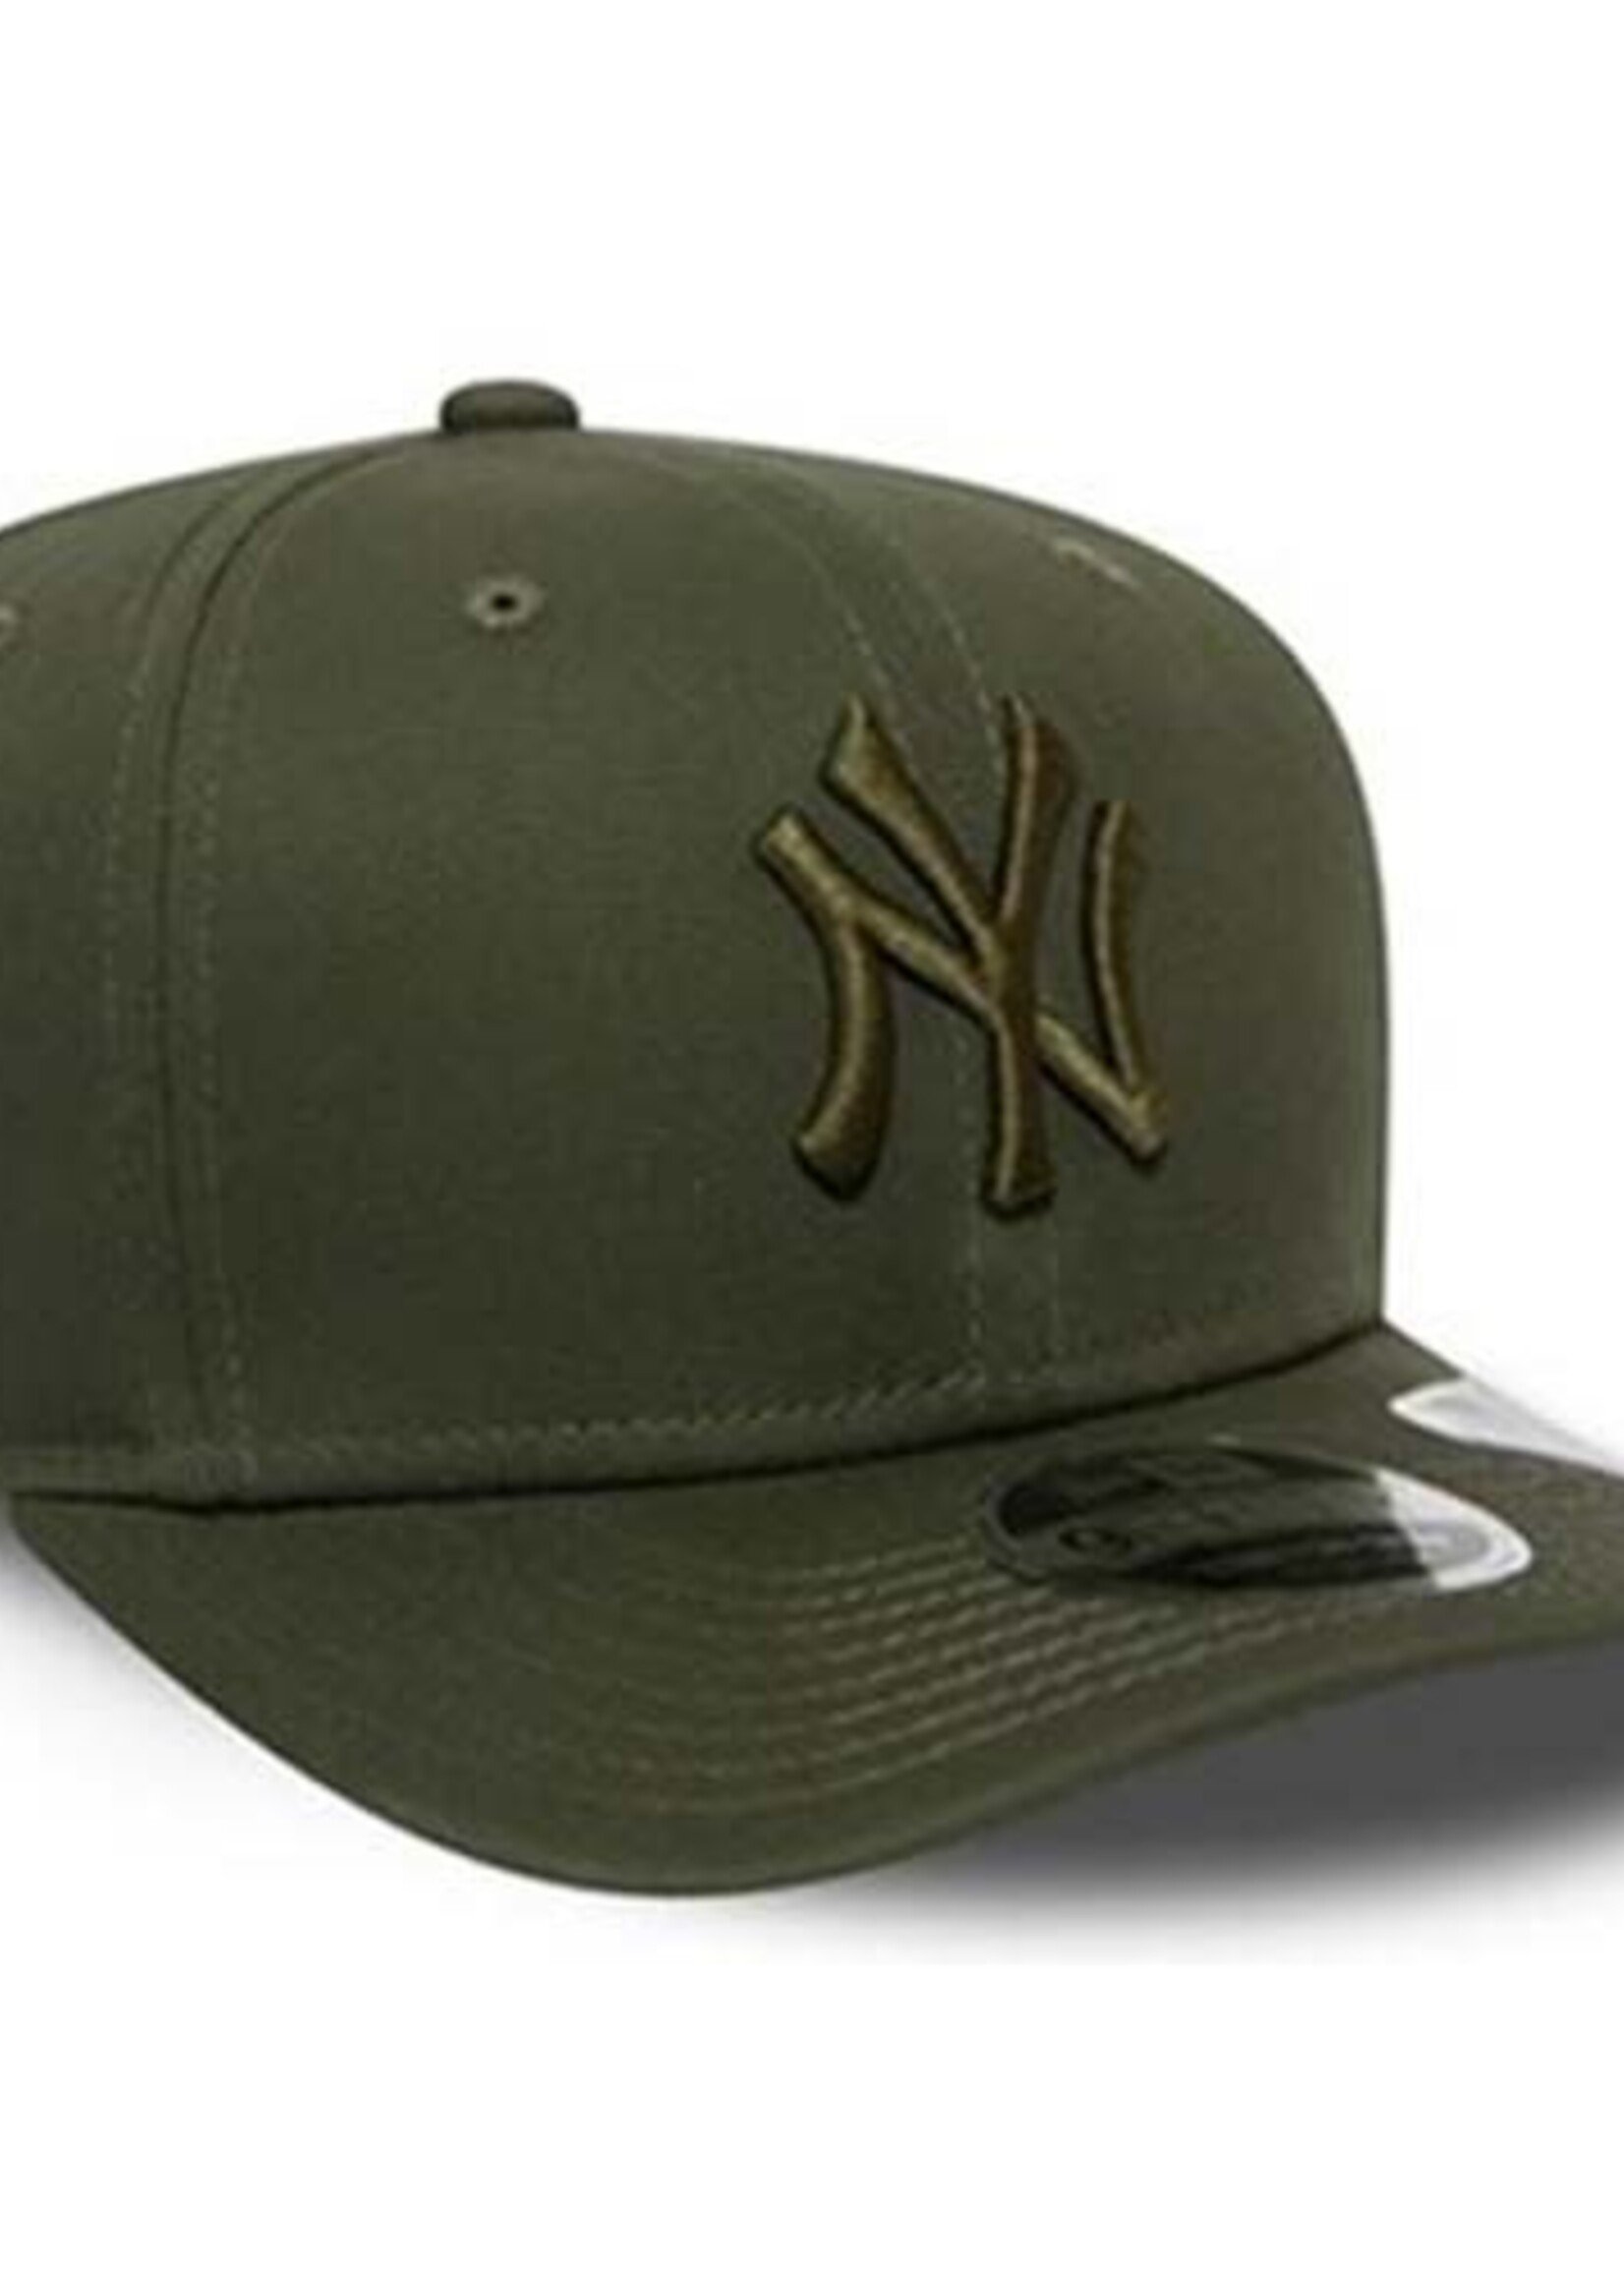 New Era Stretch Snap New York Yankees 9fifty Groen